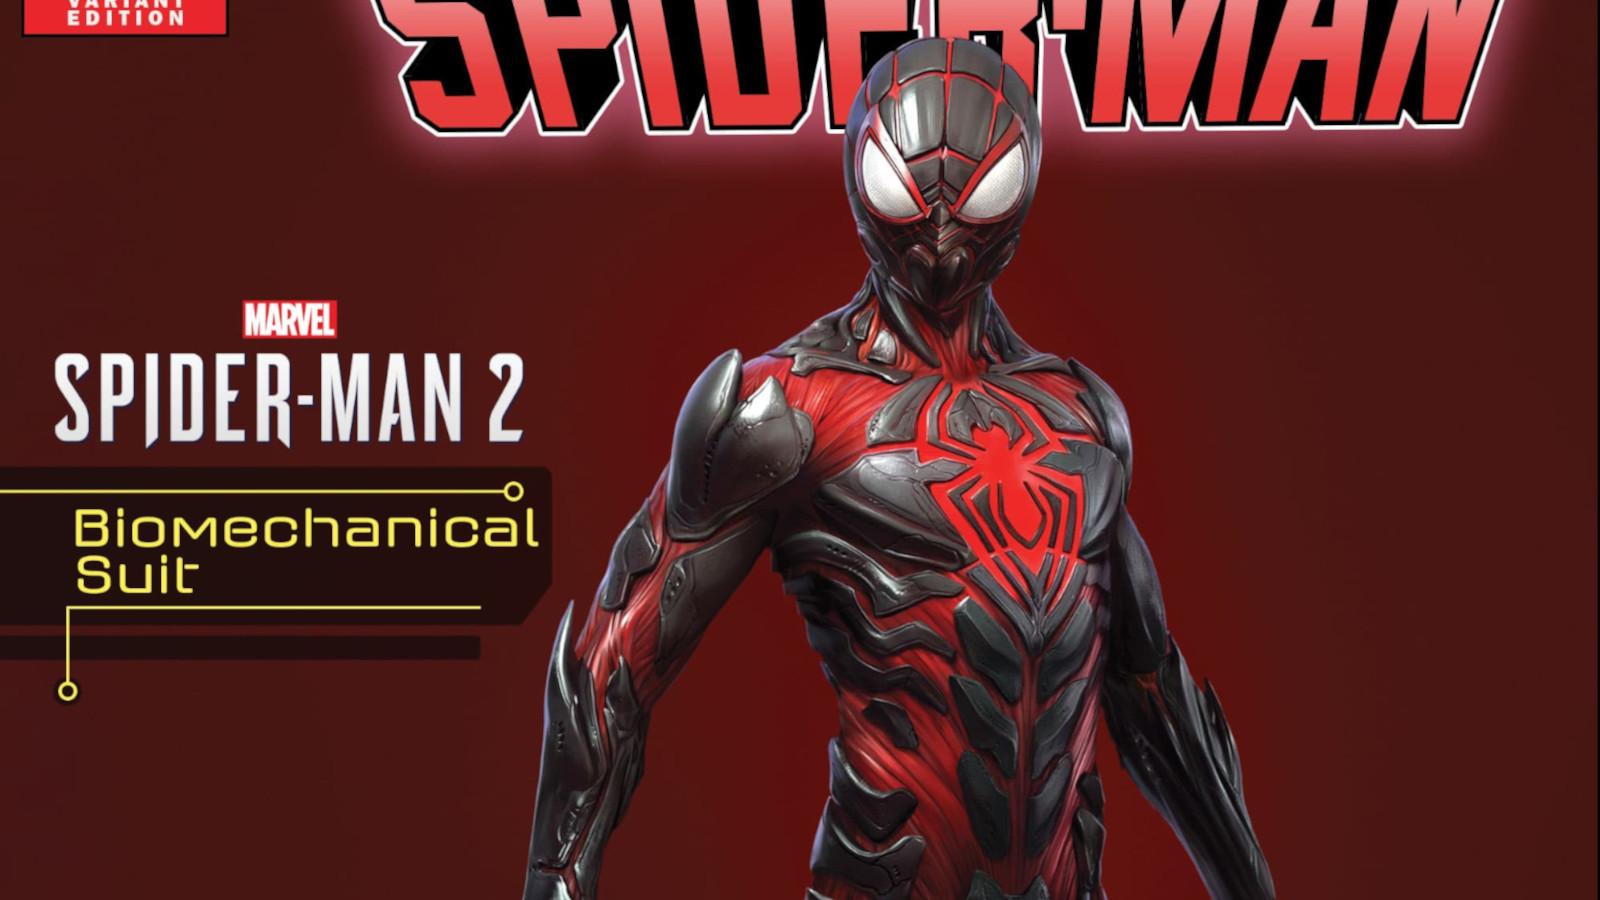 Miles Morales' Biomechanical Spider-Man suit